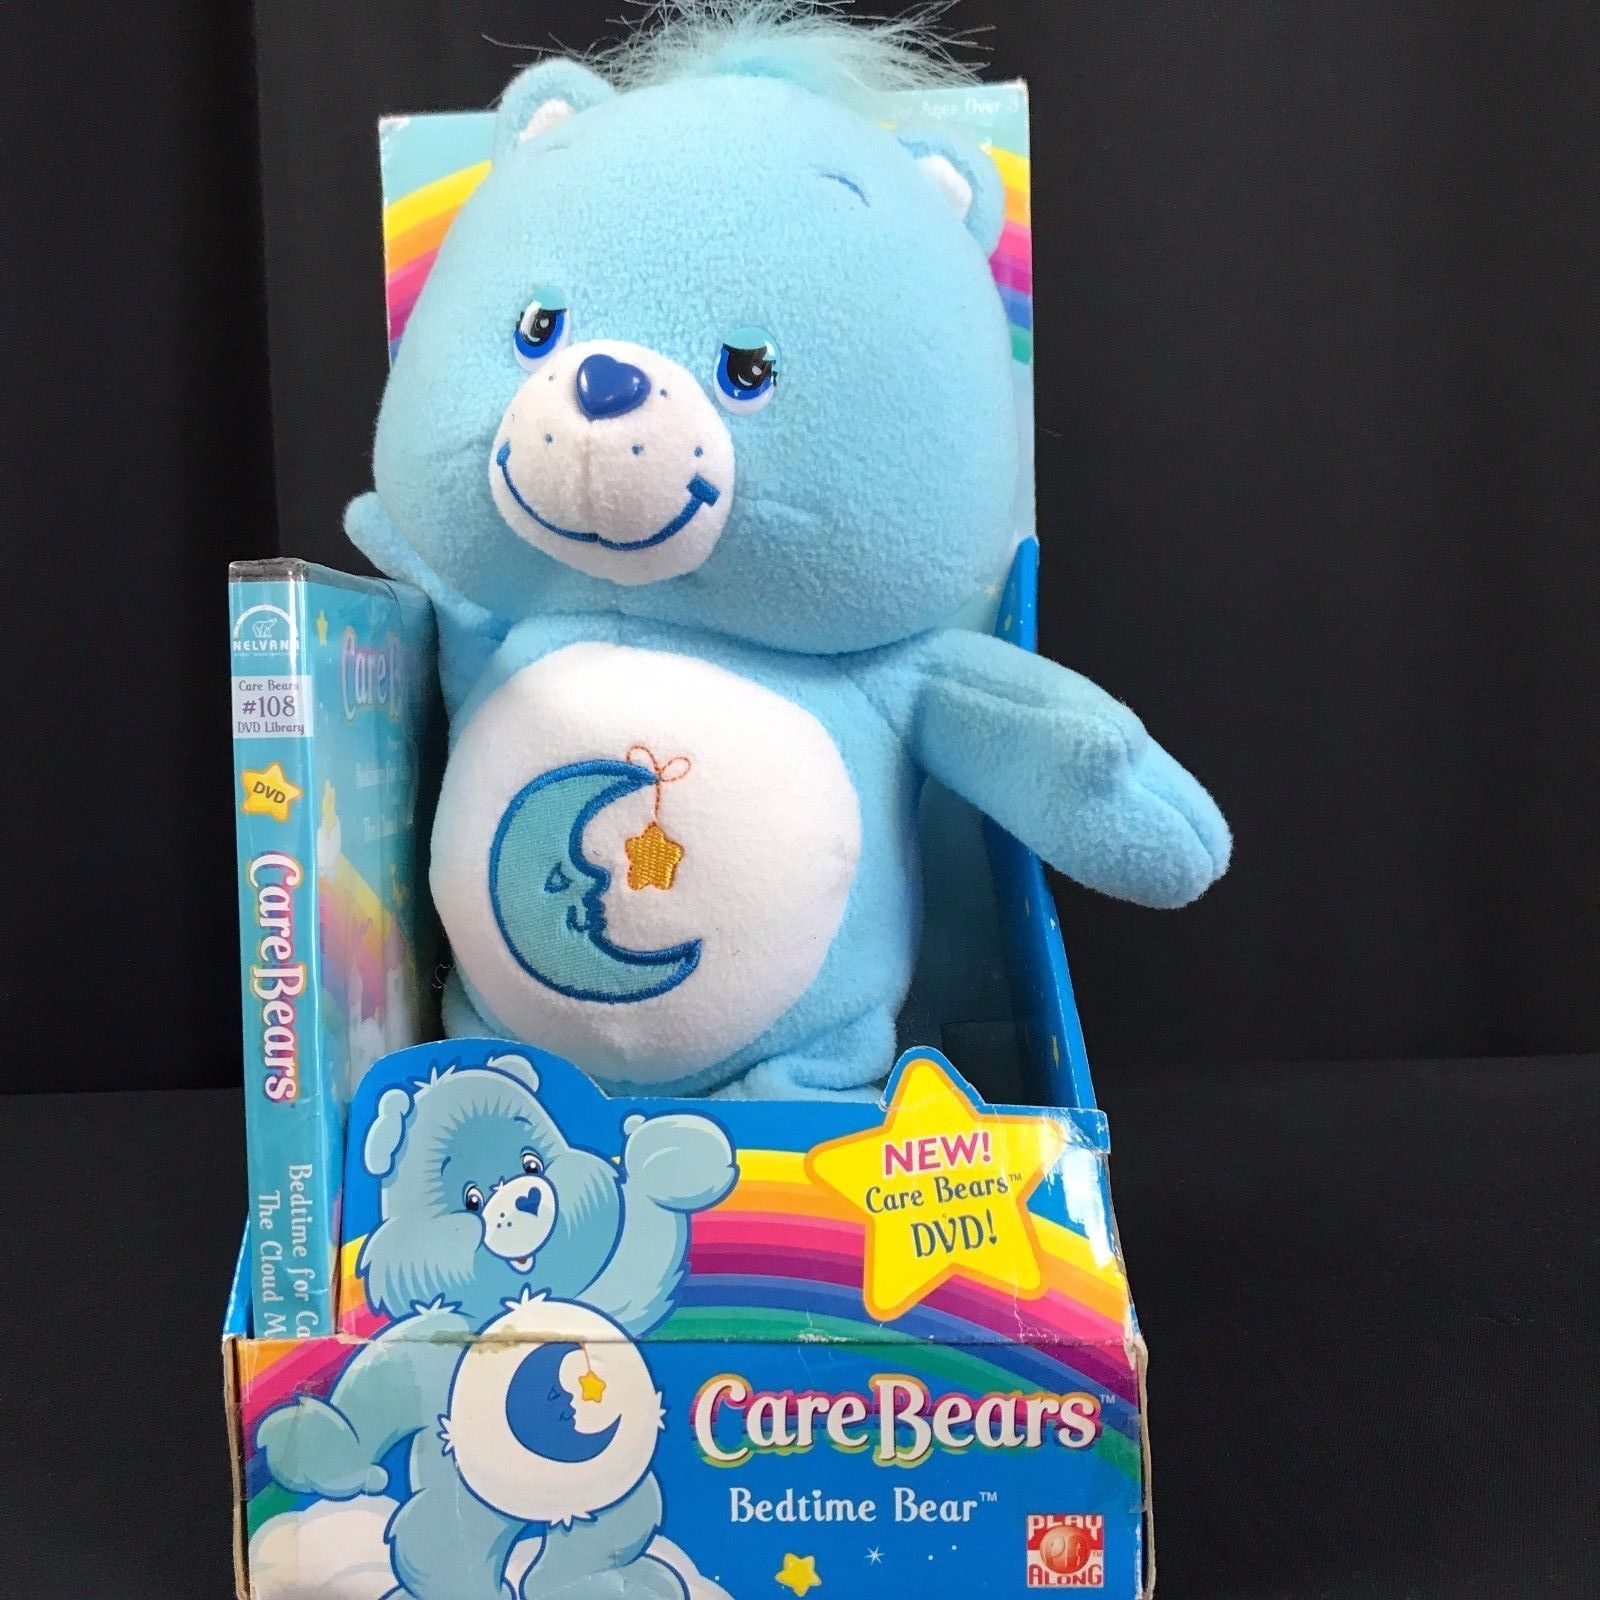 Care Bears Bedtime Bear 2005 with DVD 108 NEW Blue Moon Plush